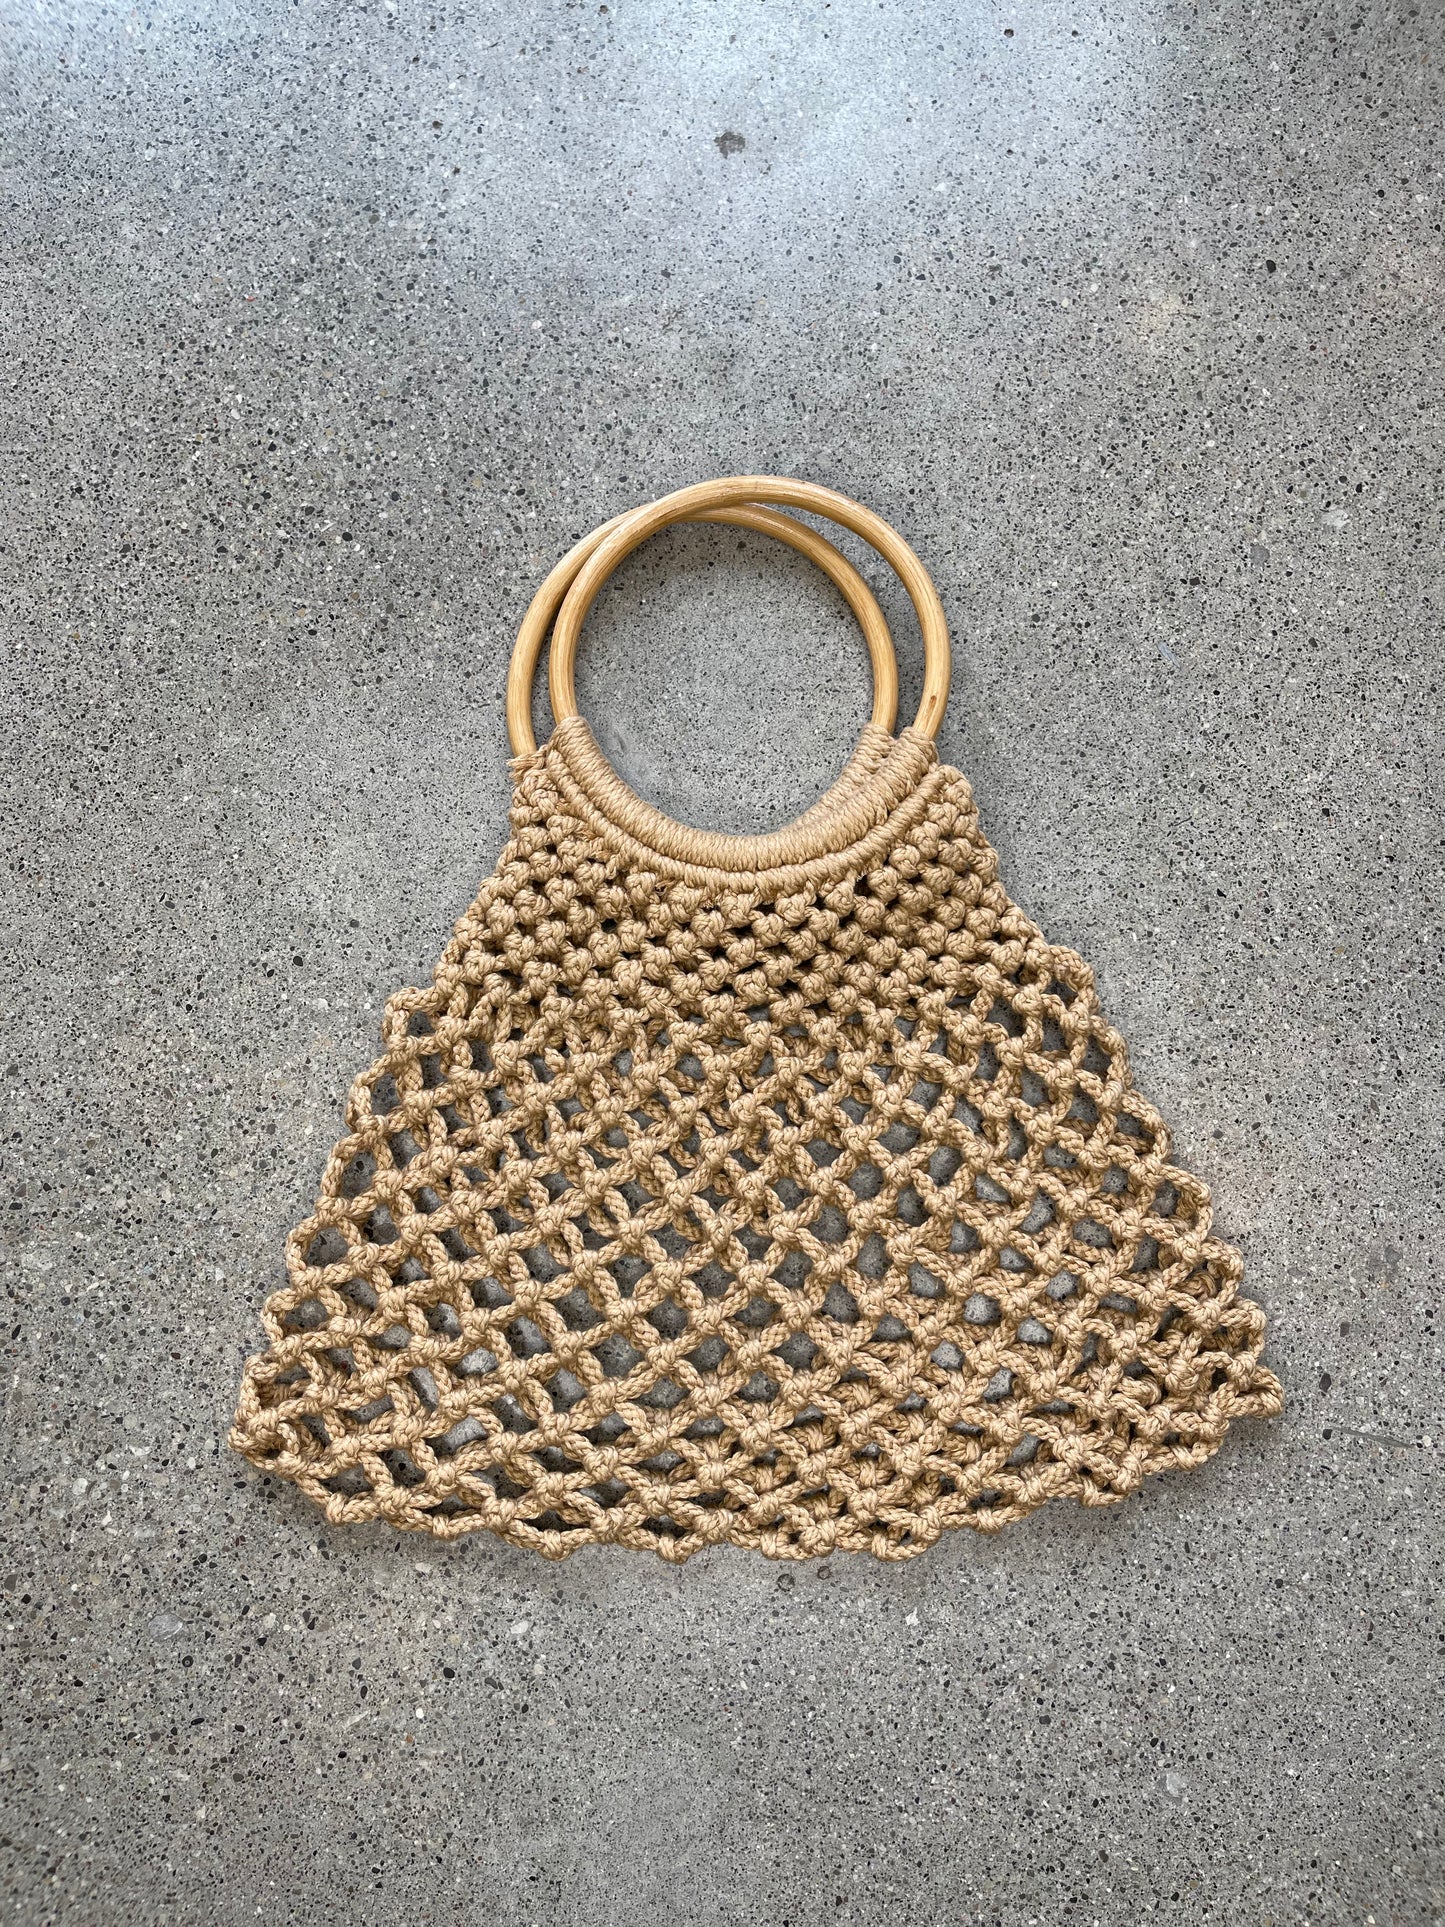 Beige Handmade Macrame Tote Bag With Wooden Handle